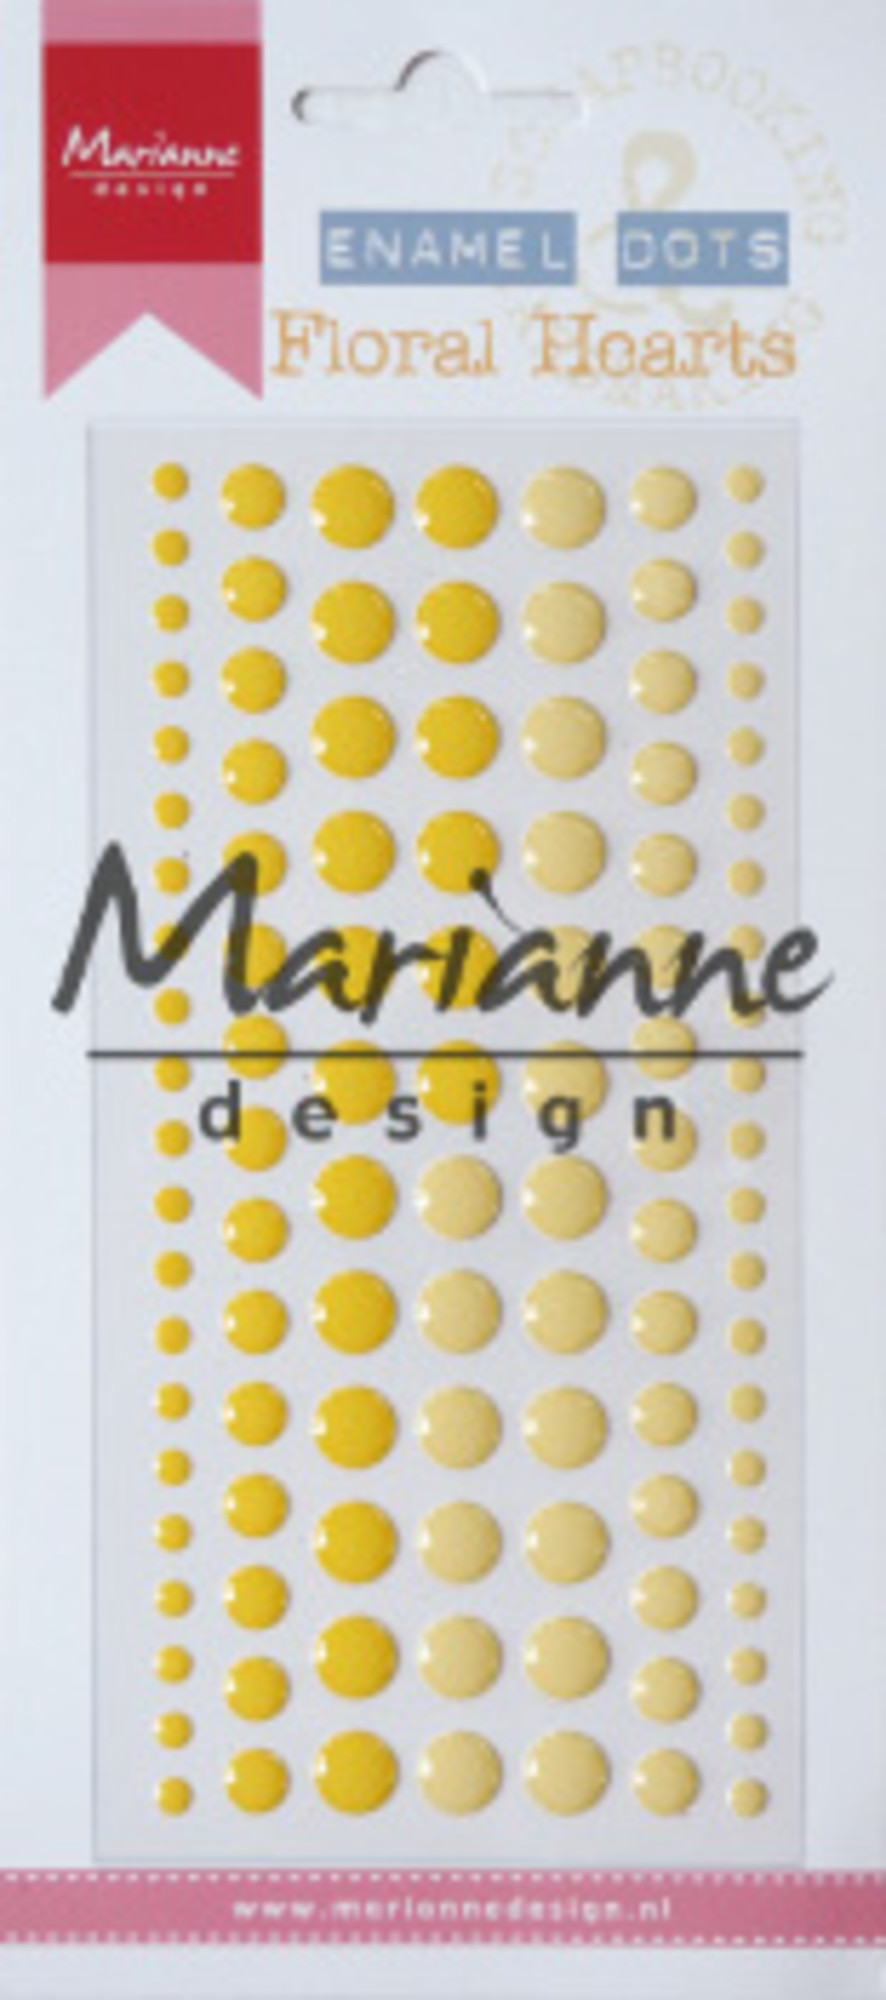 Marianne Design Decoration Enamal dots - Floral hearts